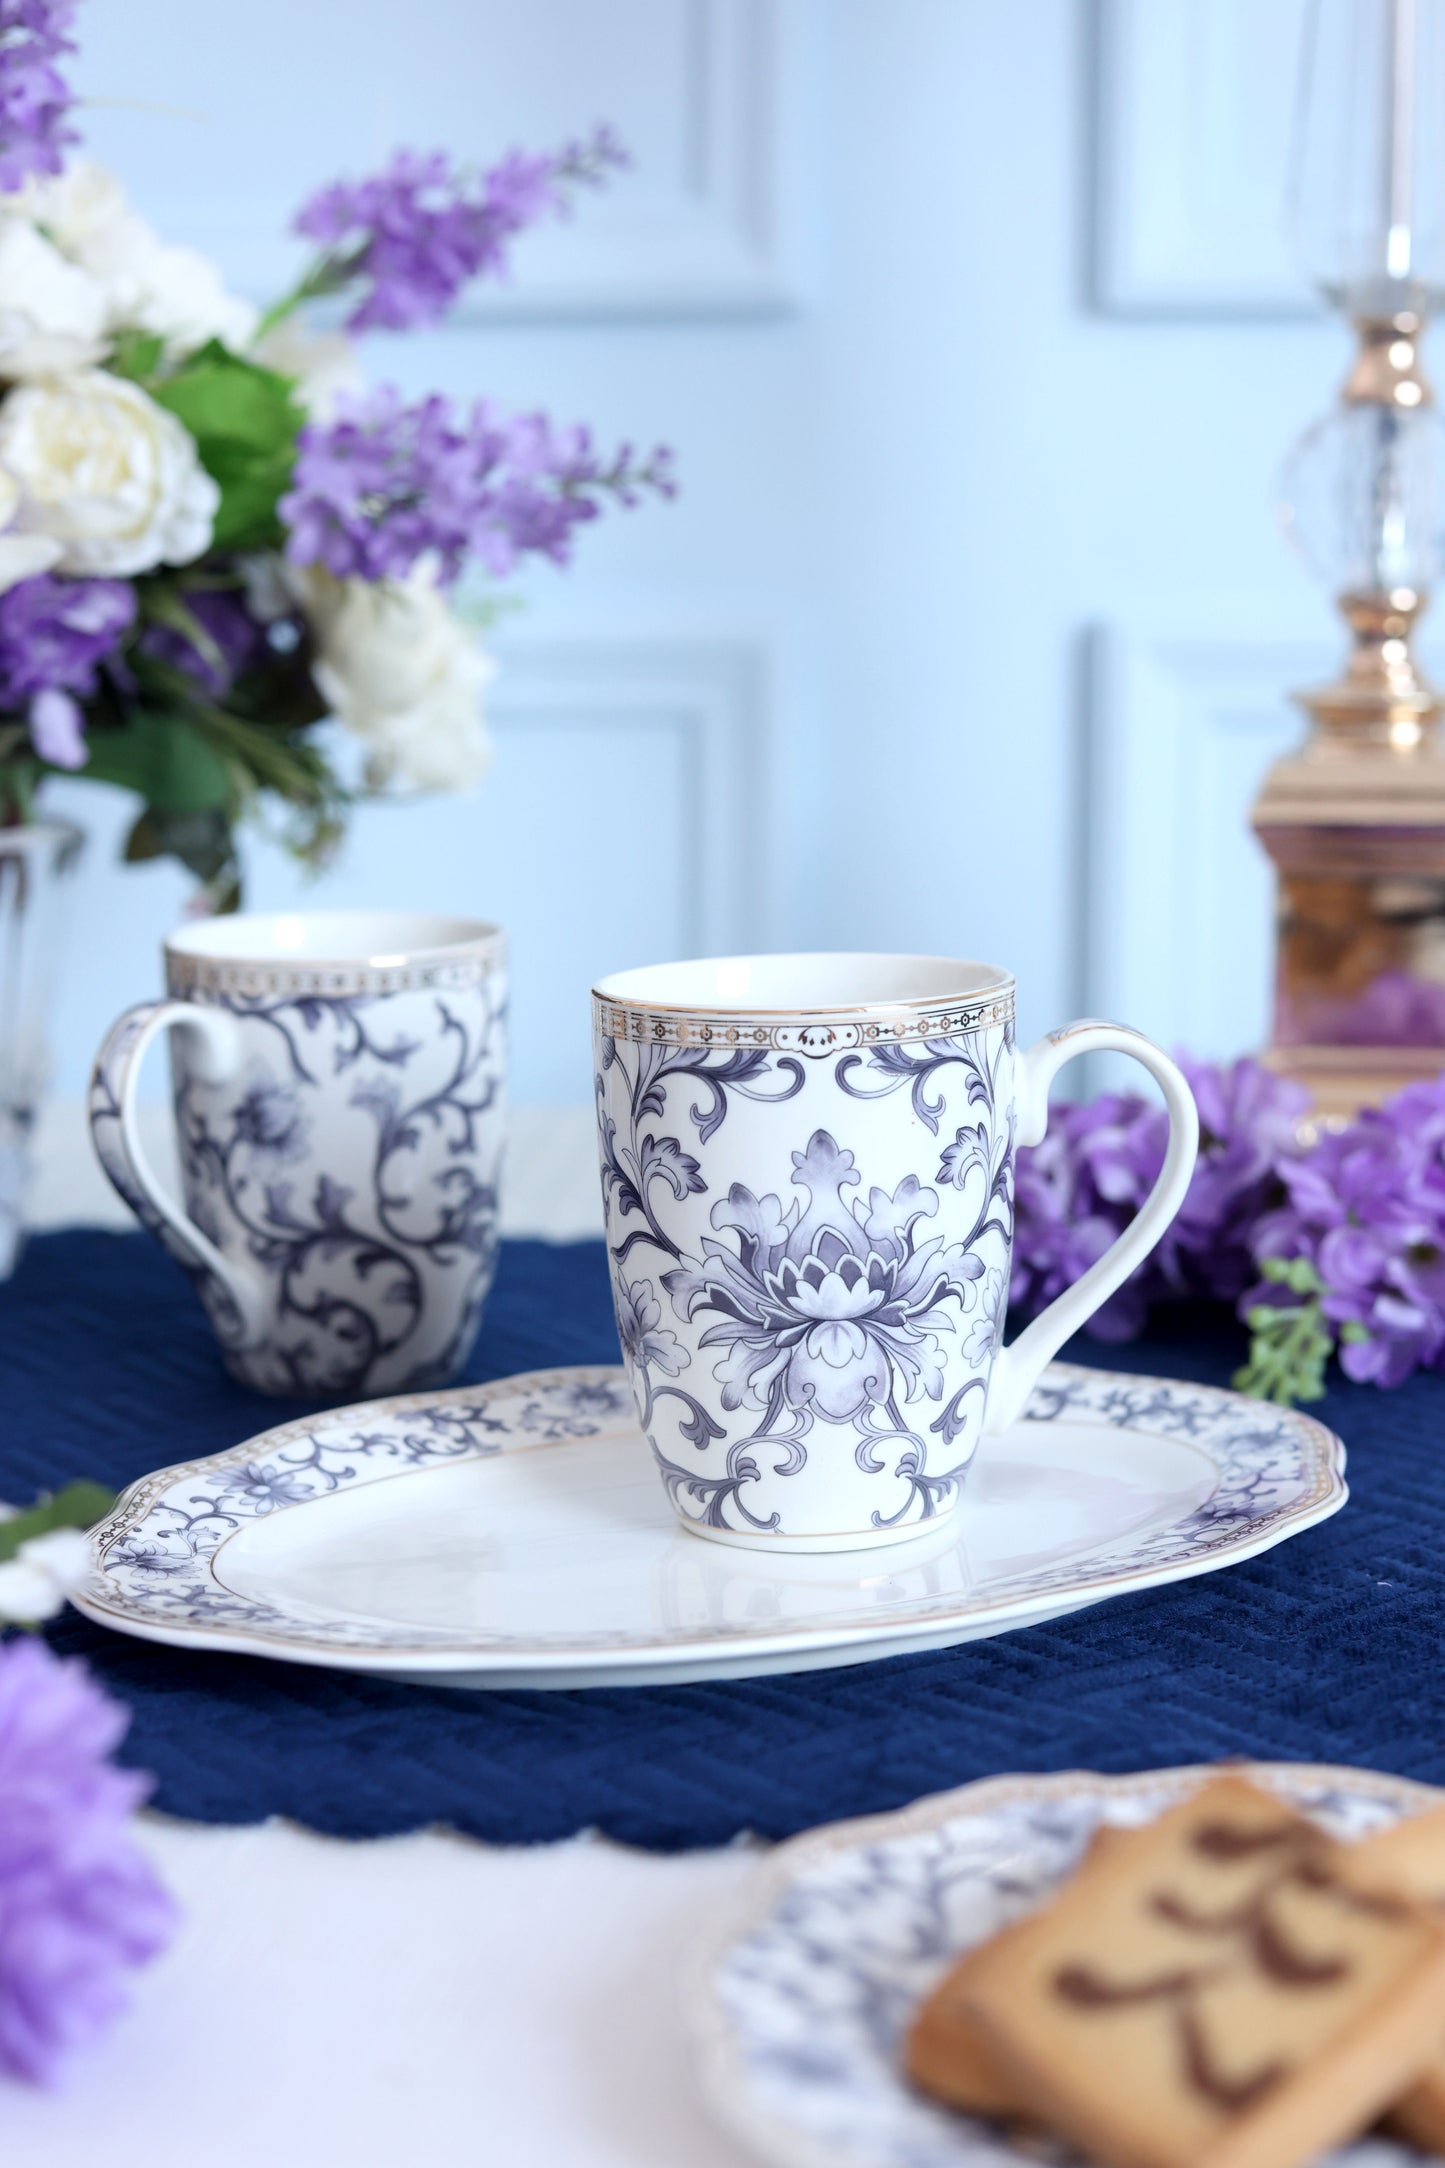 Royal Blue Coffee Mugs and Tray